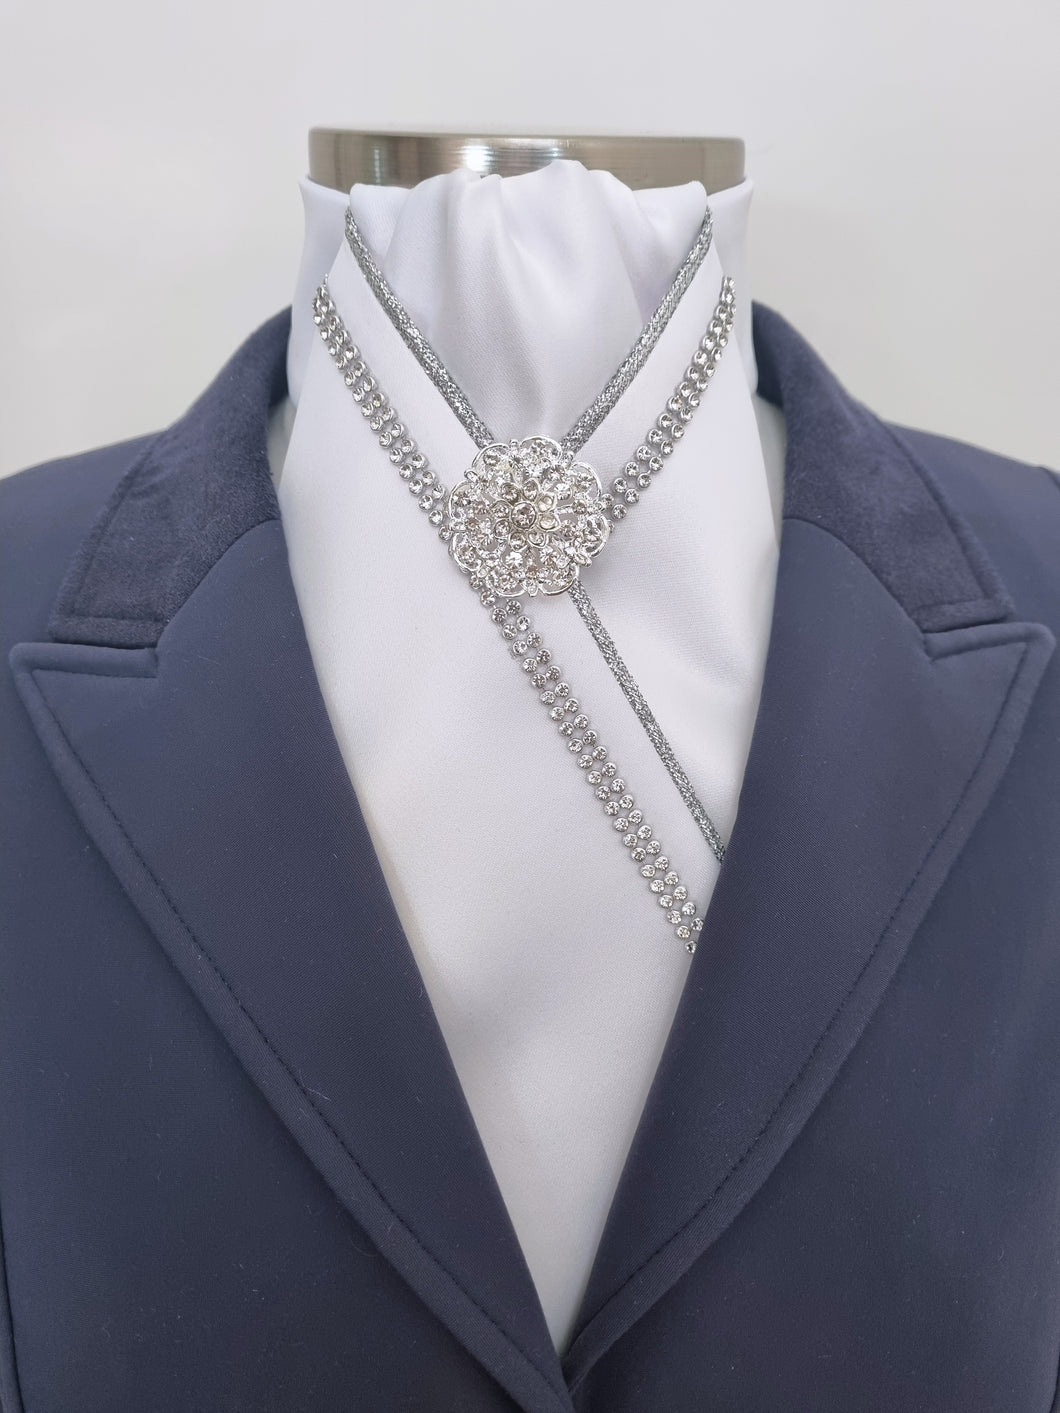 ERA VANESSA STOCK TIE - White satin with crystal trim & brooch